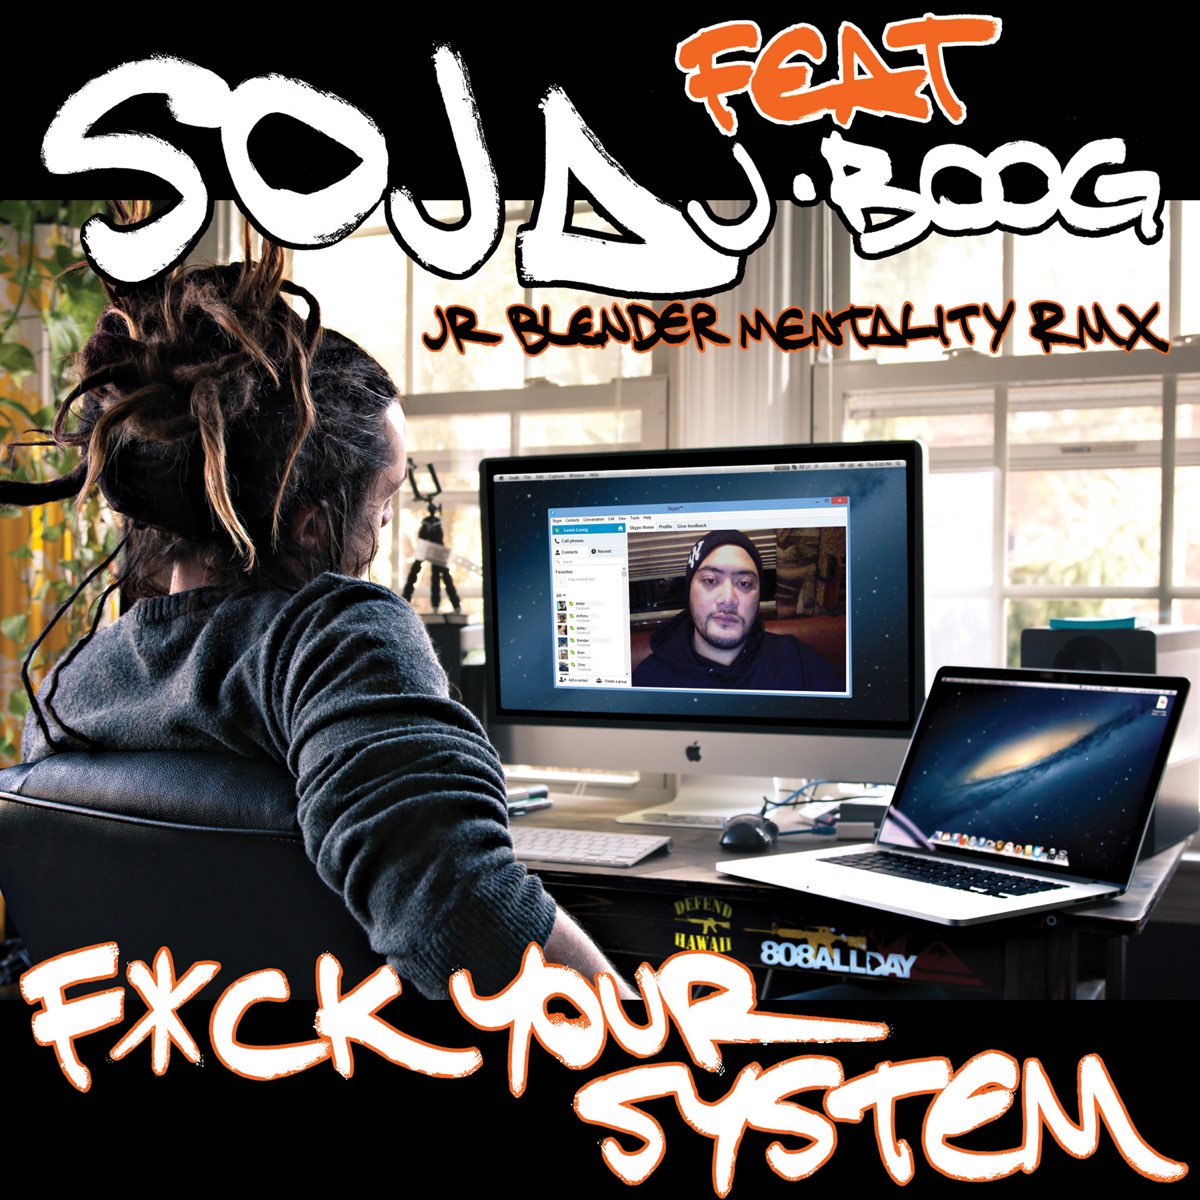 F**k Your System (Jr Blender Mentality RMX) [feat. J Boog] - Single by SOJA  on Apple Music